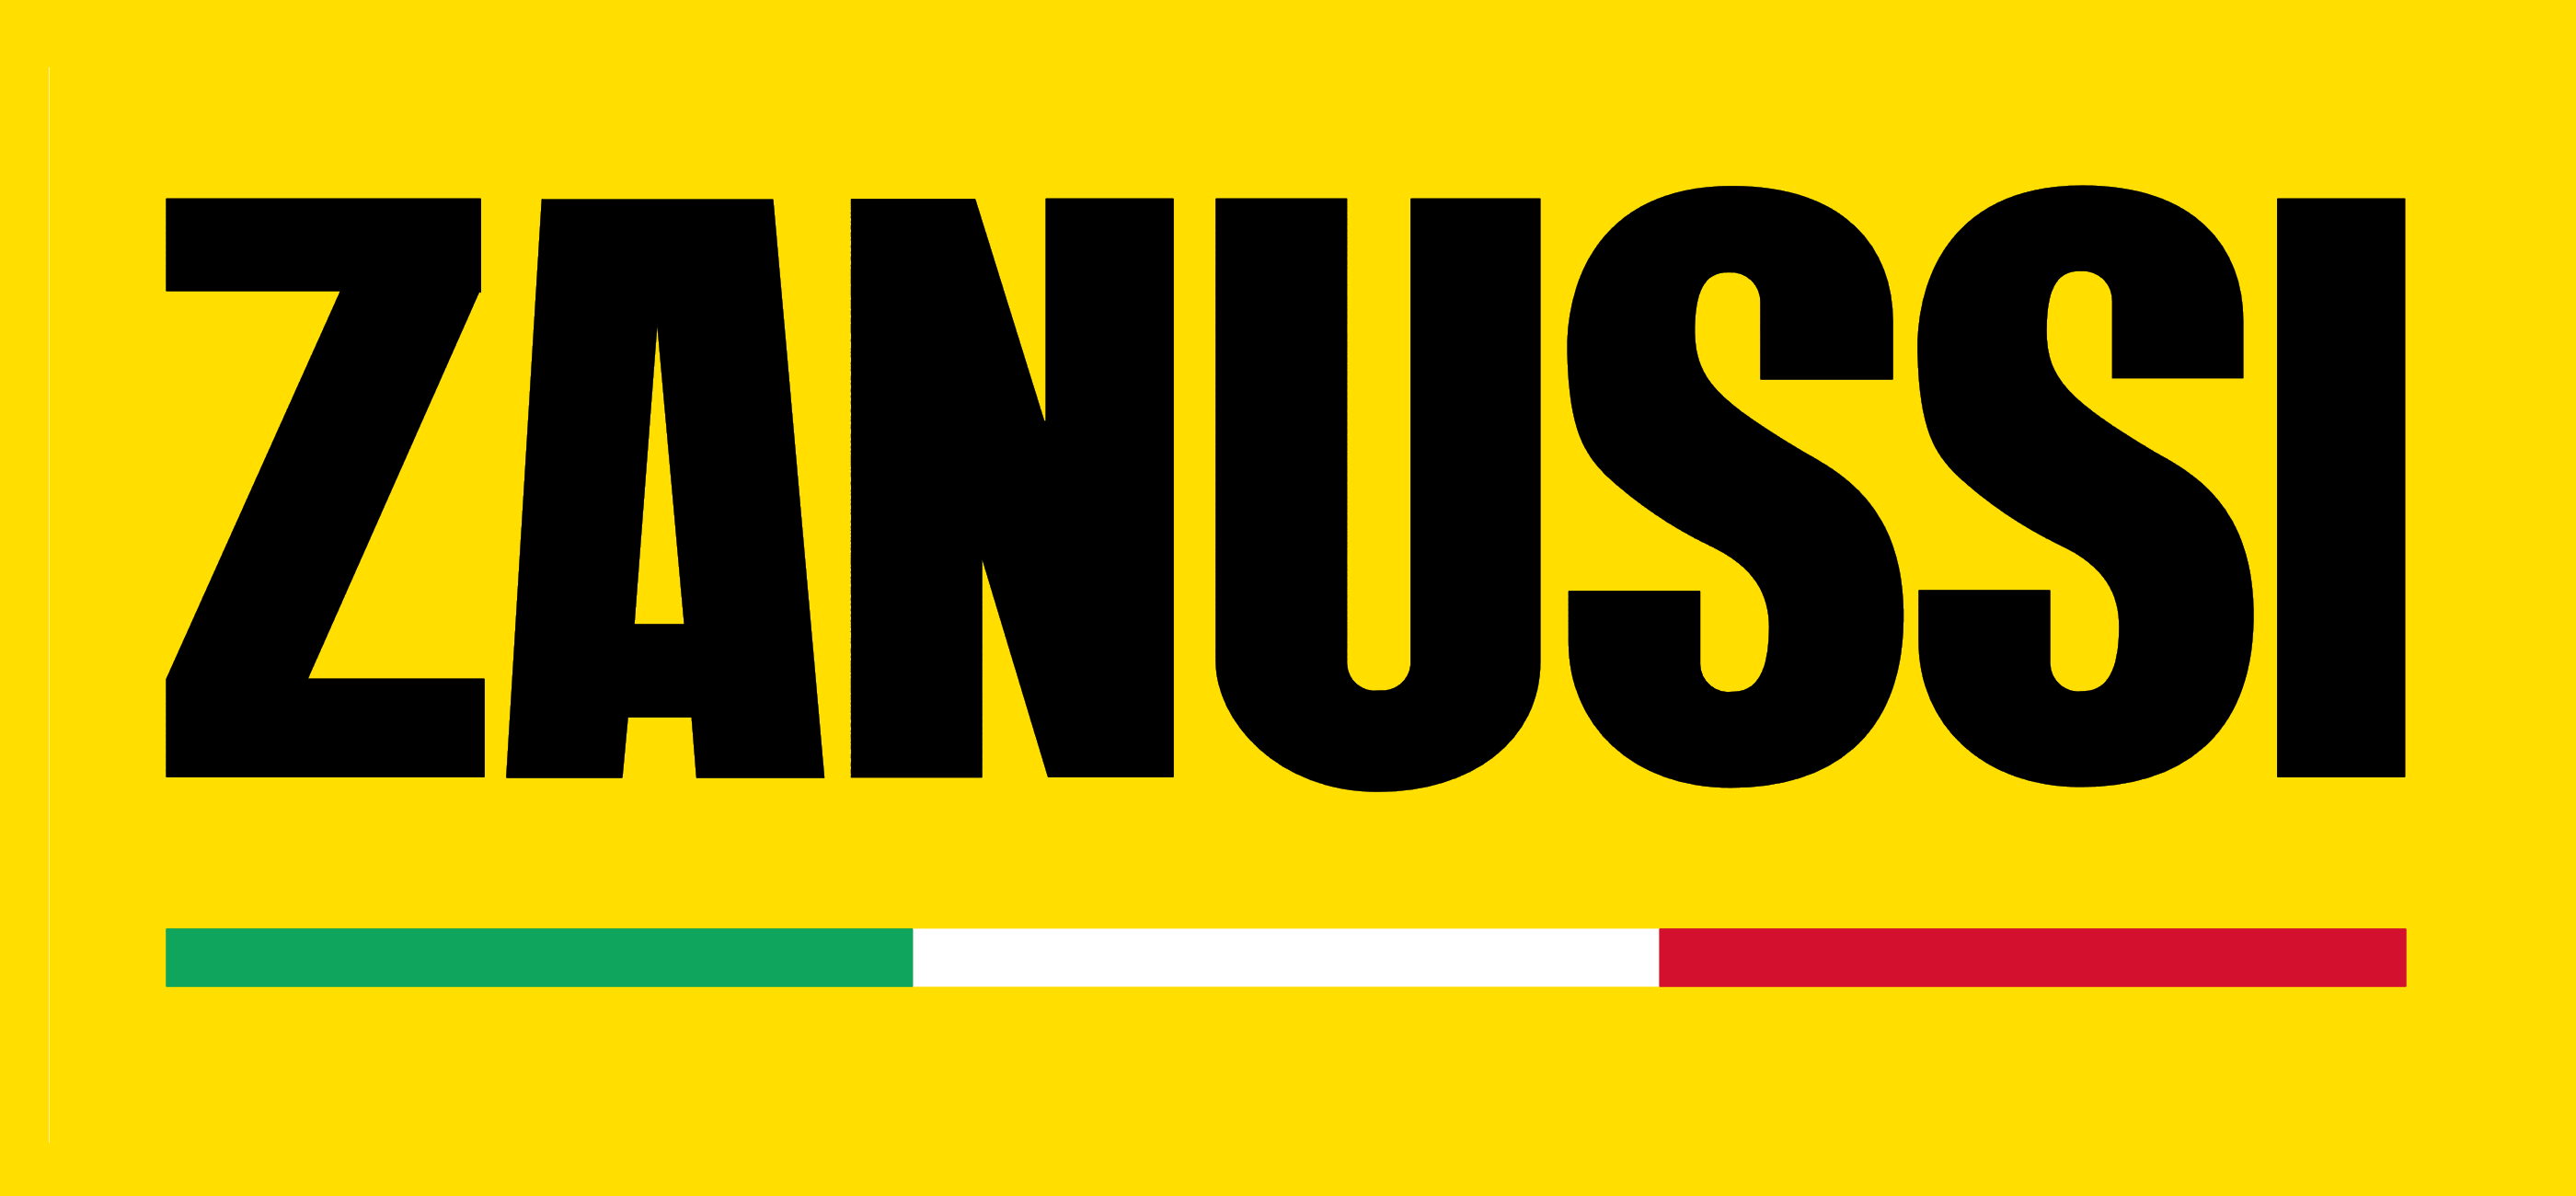 Zanussi_logo_logotype